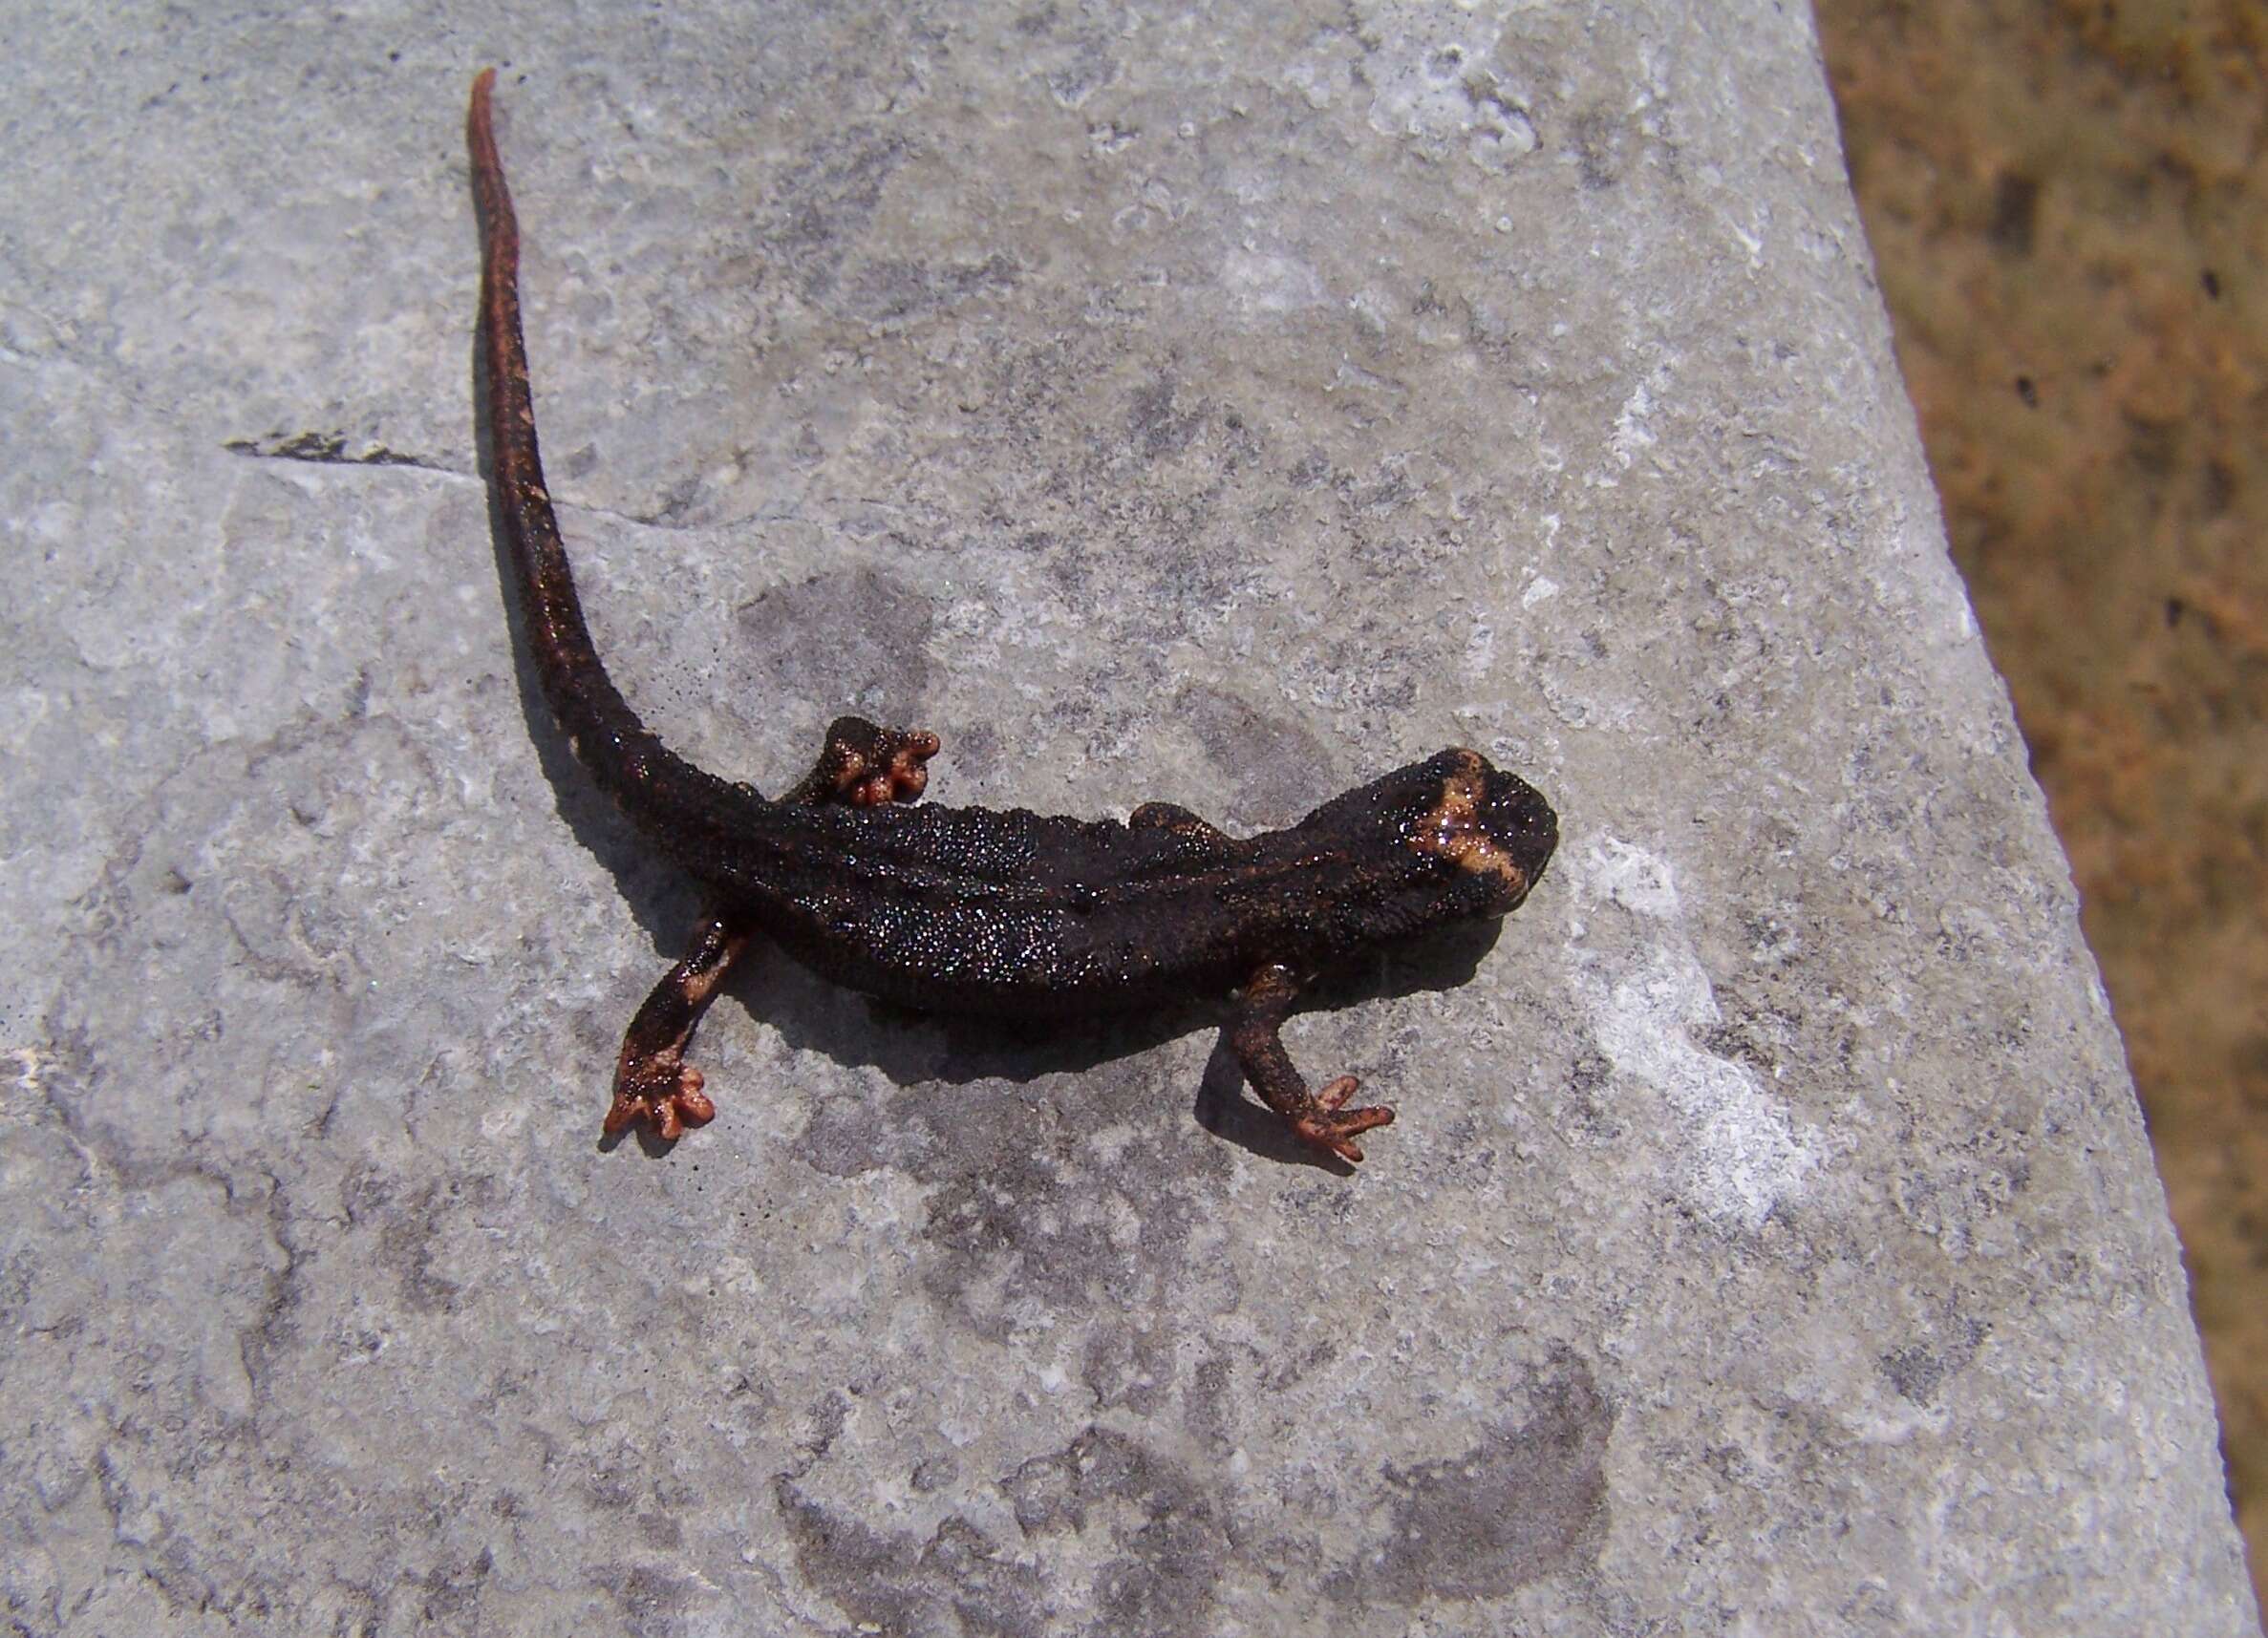 Image of Spectacled Salamander